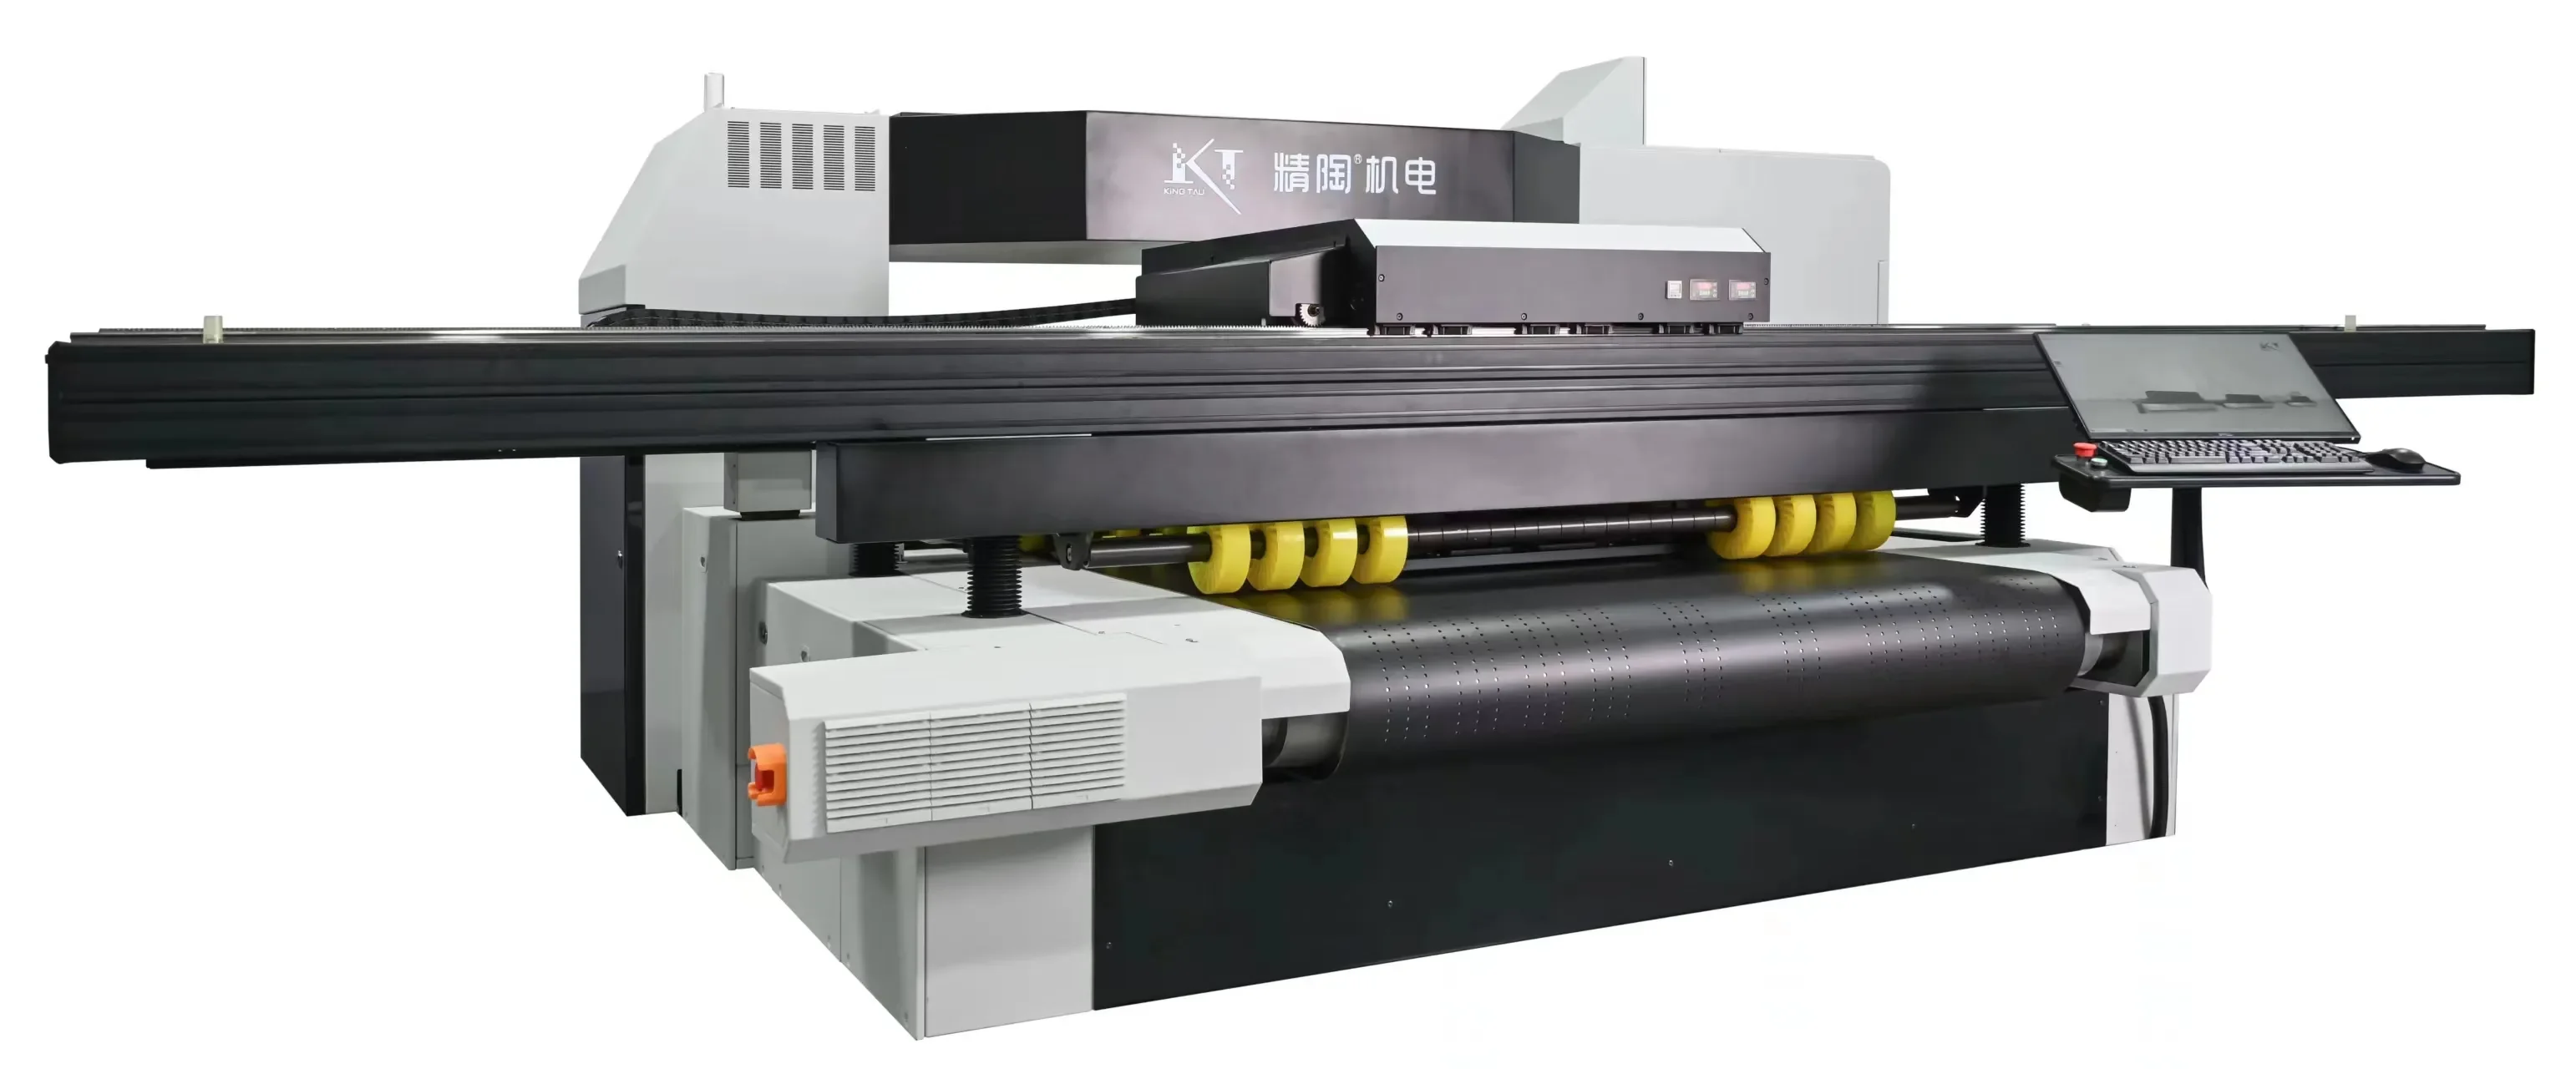 SCB1600 single pass industrial corrugated printer